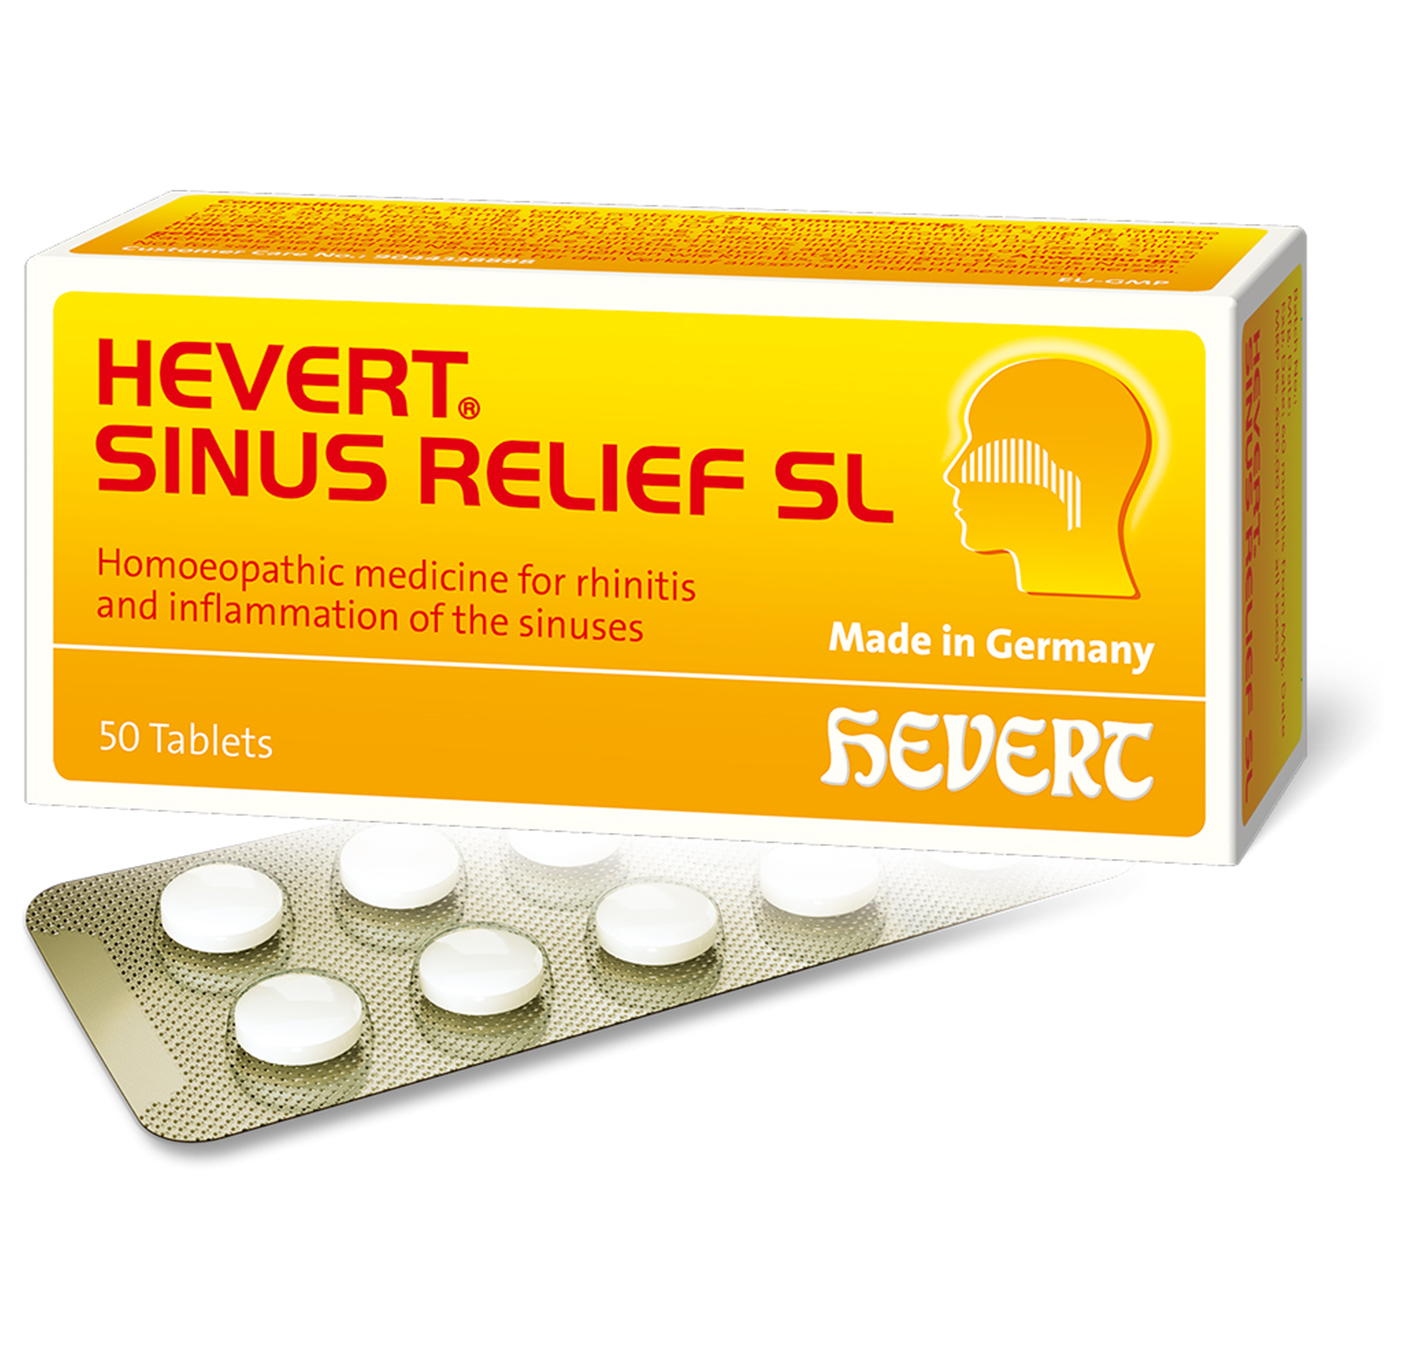 Hevert Sinus Relief meiacine style=